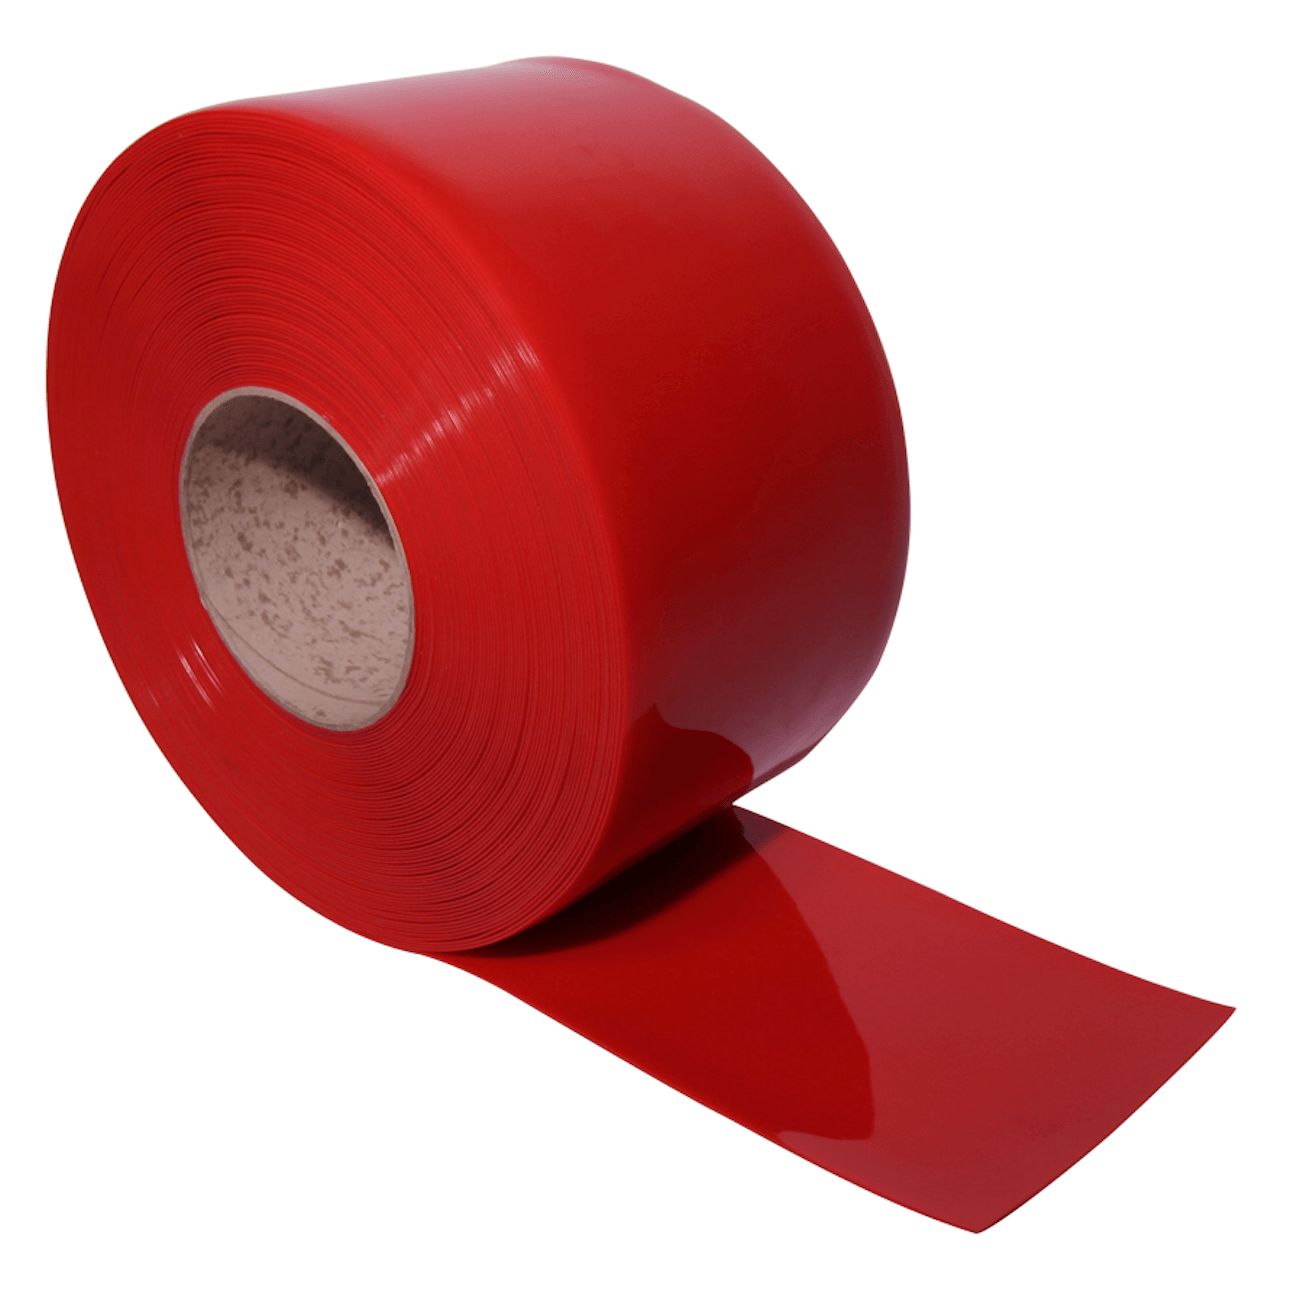 Лента пвх красная. ПВХ завеса морозостойкая (рифленая) 2x200. ПВХ завеса рифленая 2x200. ПВХ завеса красная 200 мм. Полосовая ПВХ завеса стандартная (красная) 200х2 мм.